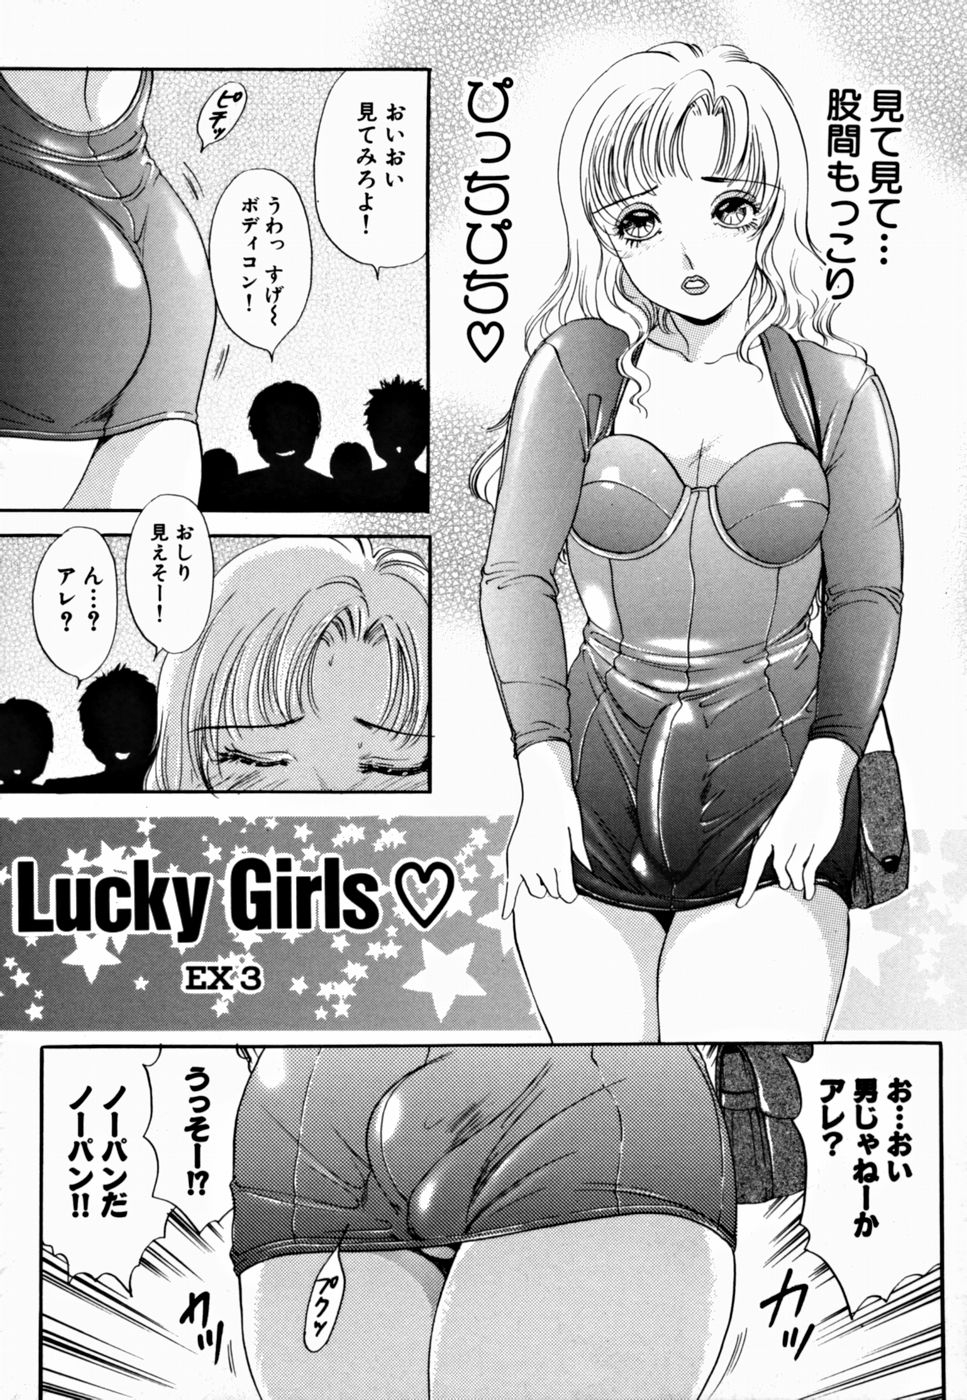 [The Amanoja9] T.S. I LOVE YOU... 2 - Lucky Girls Tsuiteru Onna 150